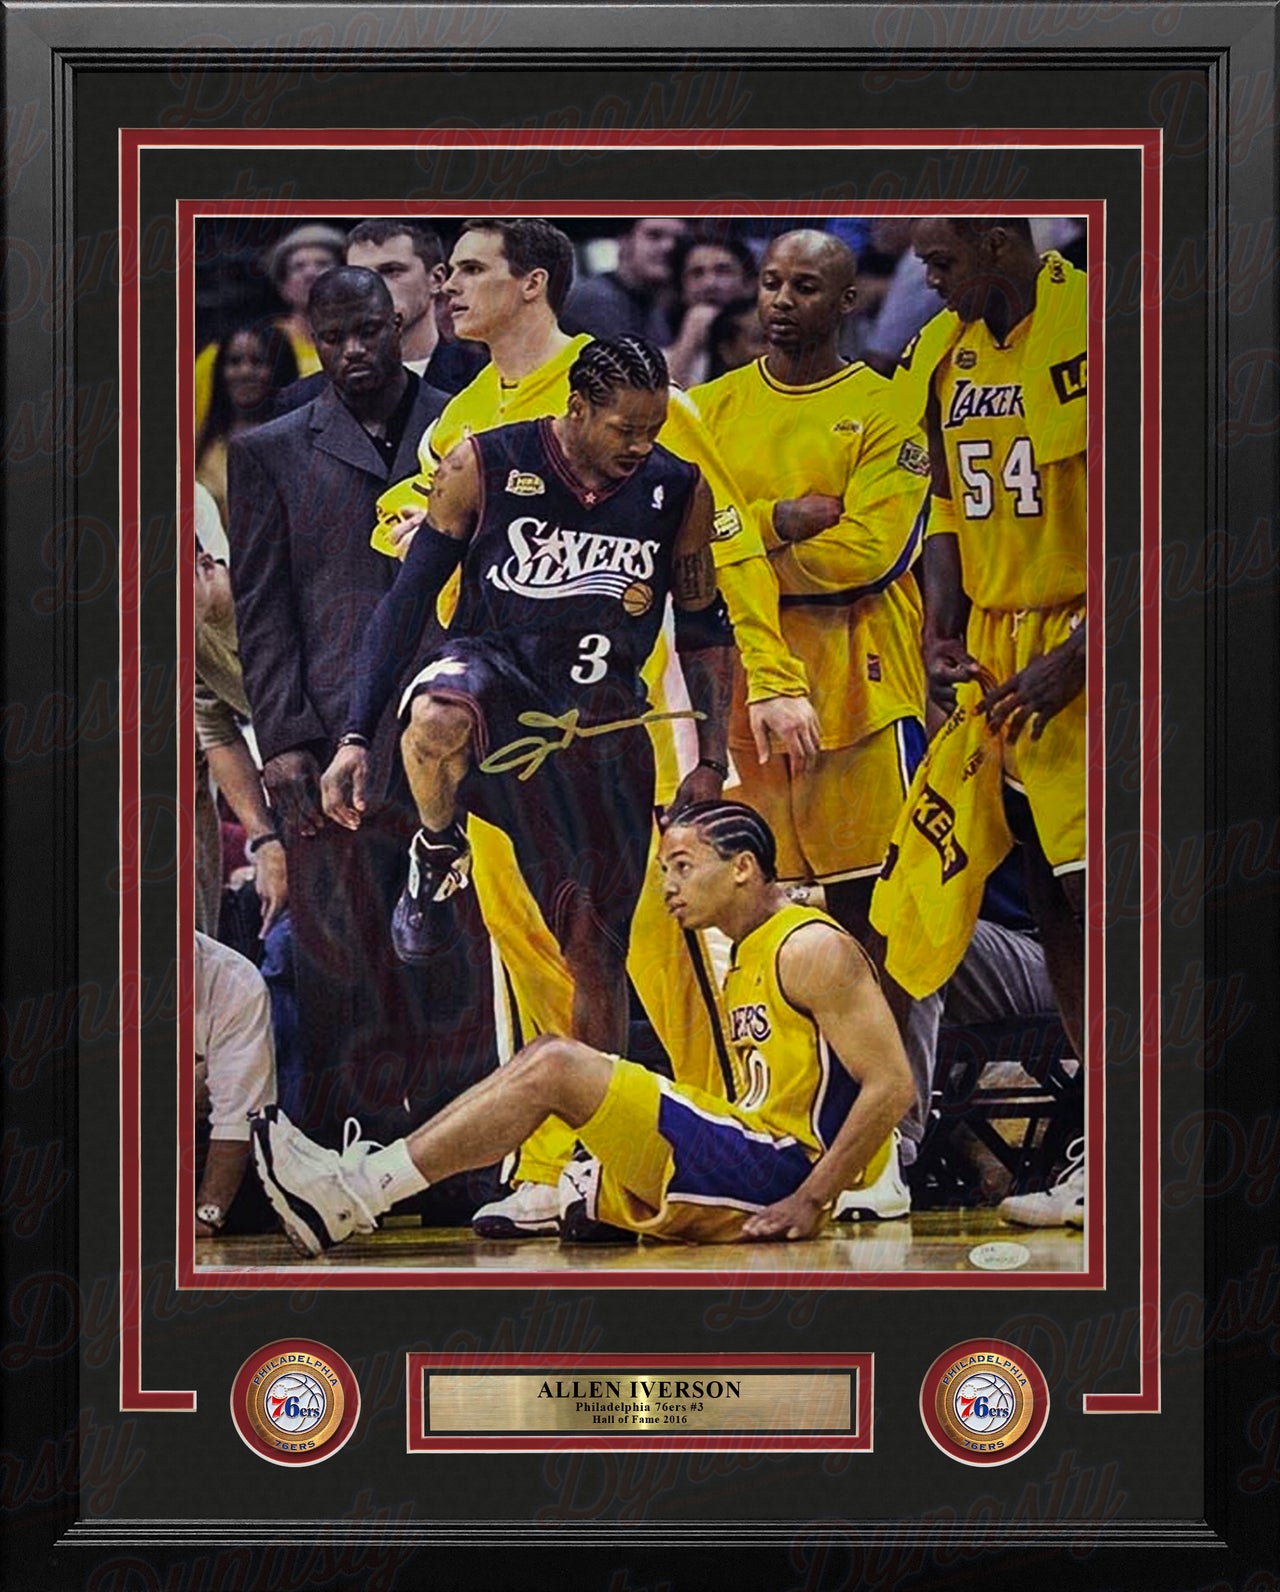 Allen Iverson Standing Over Tyronn Lue Philadelphia 76ers Autographed 16x20 Framed Basketball Photo - Dynasty Sports & Framing 